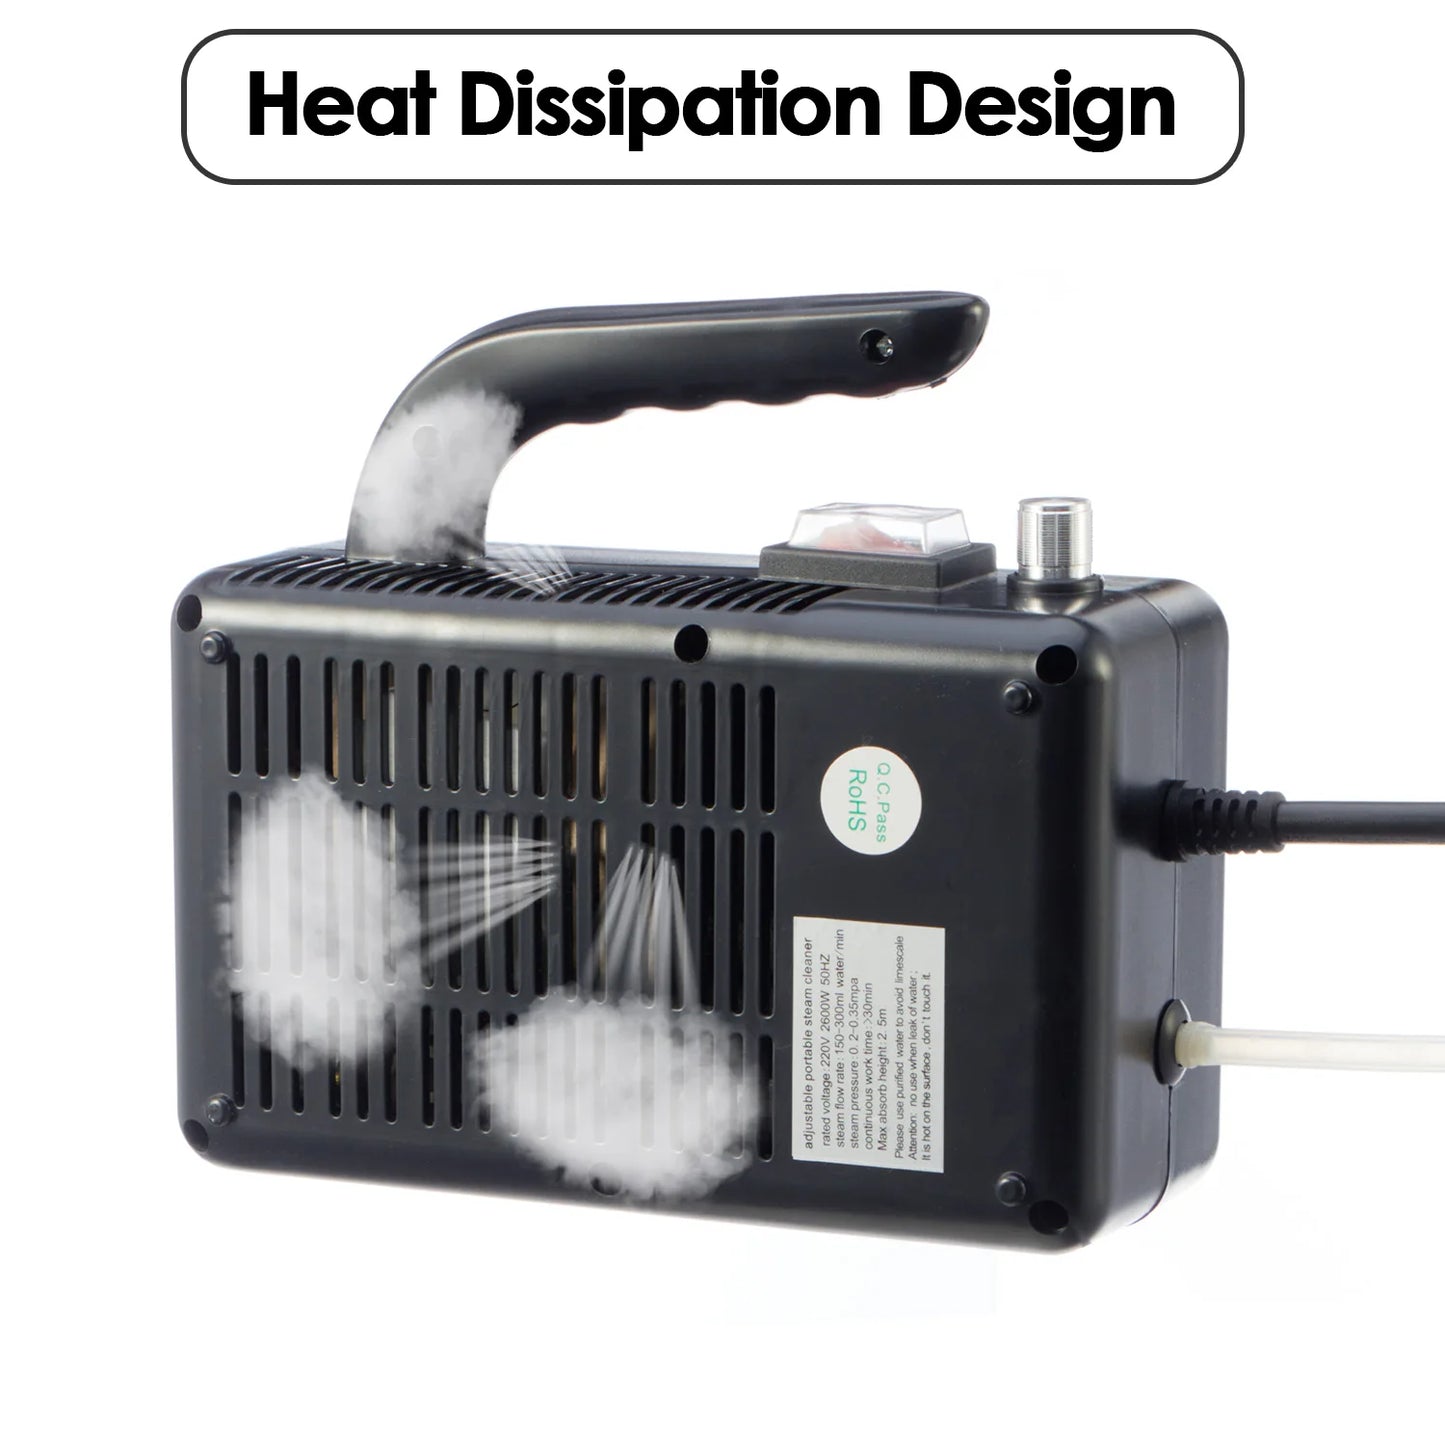 Steam Cleaner High Temperature Sterilization
Air Conditioning
Kitchen Hood
Car Steam Cleaners US/EU Plug